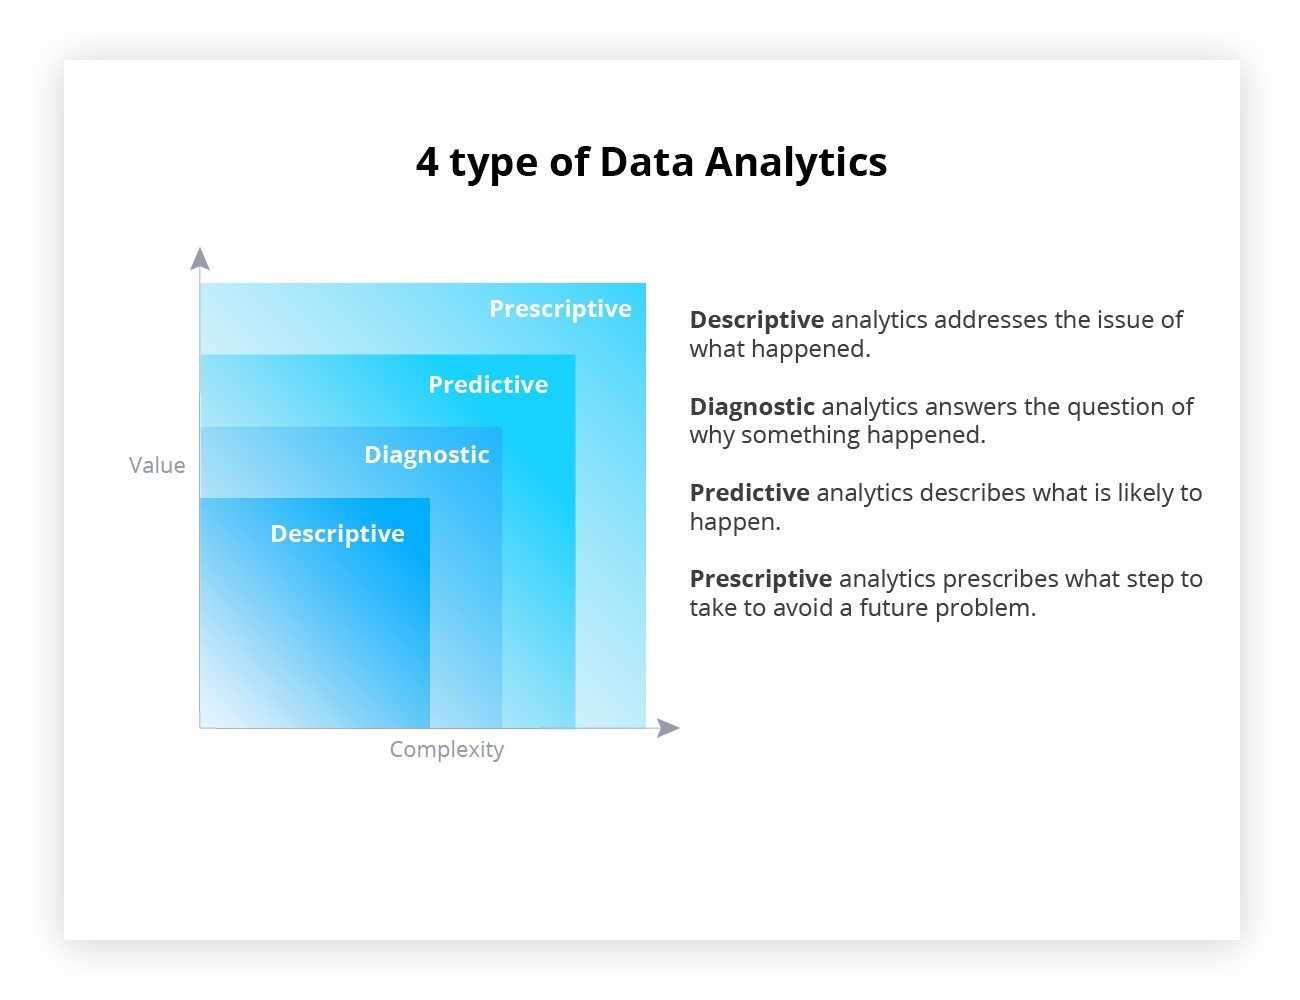 types of data analysis